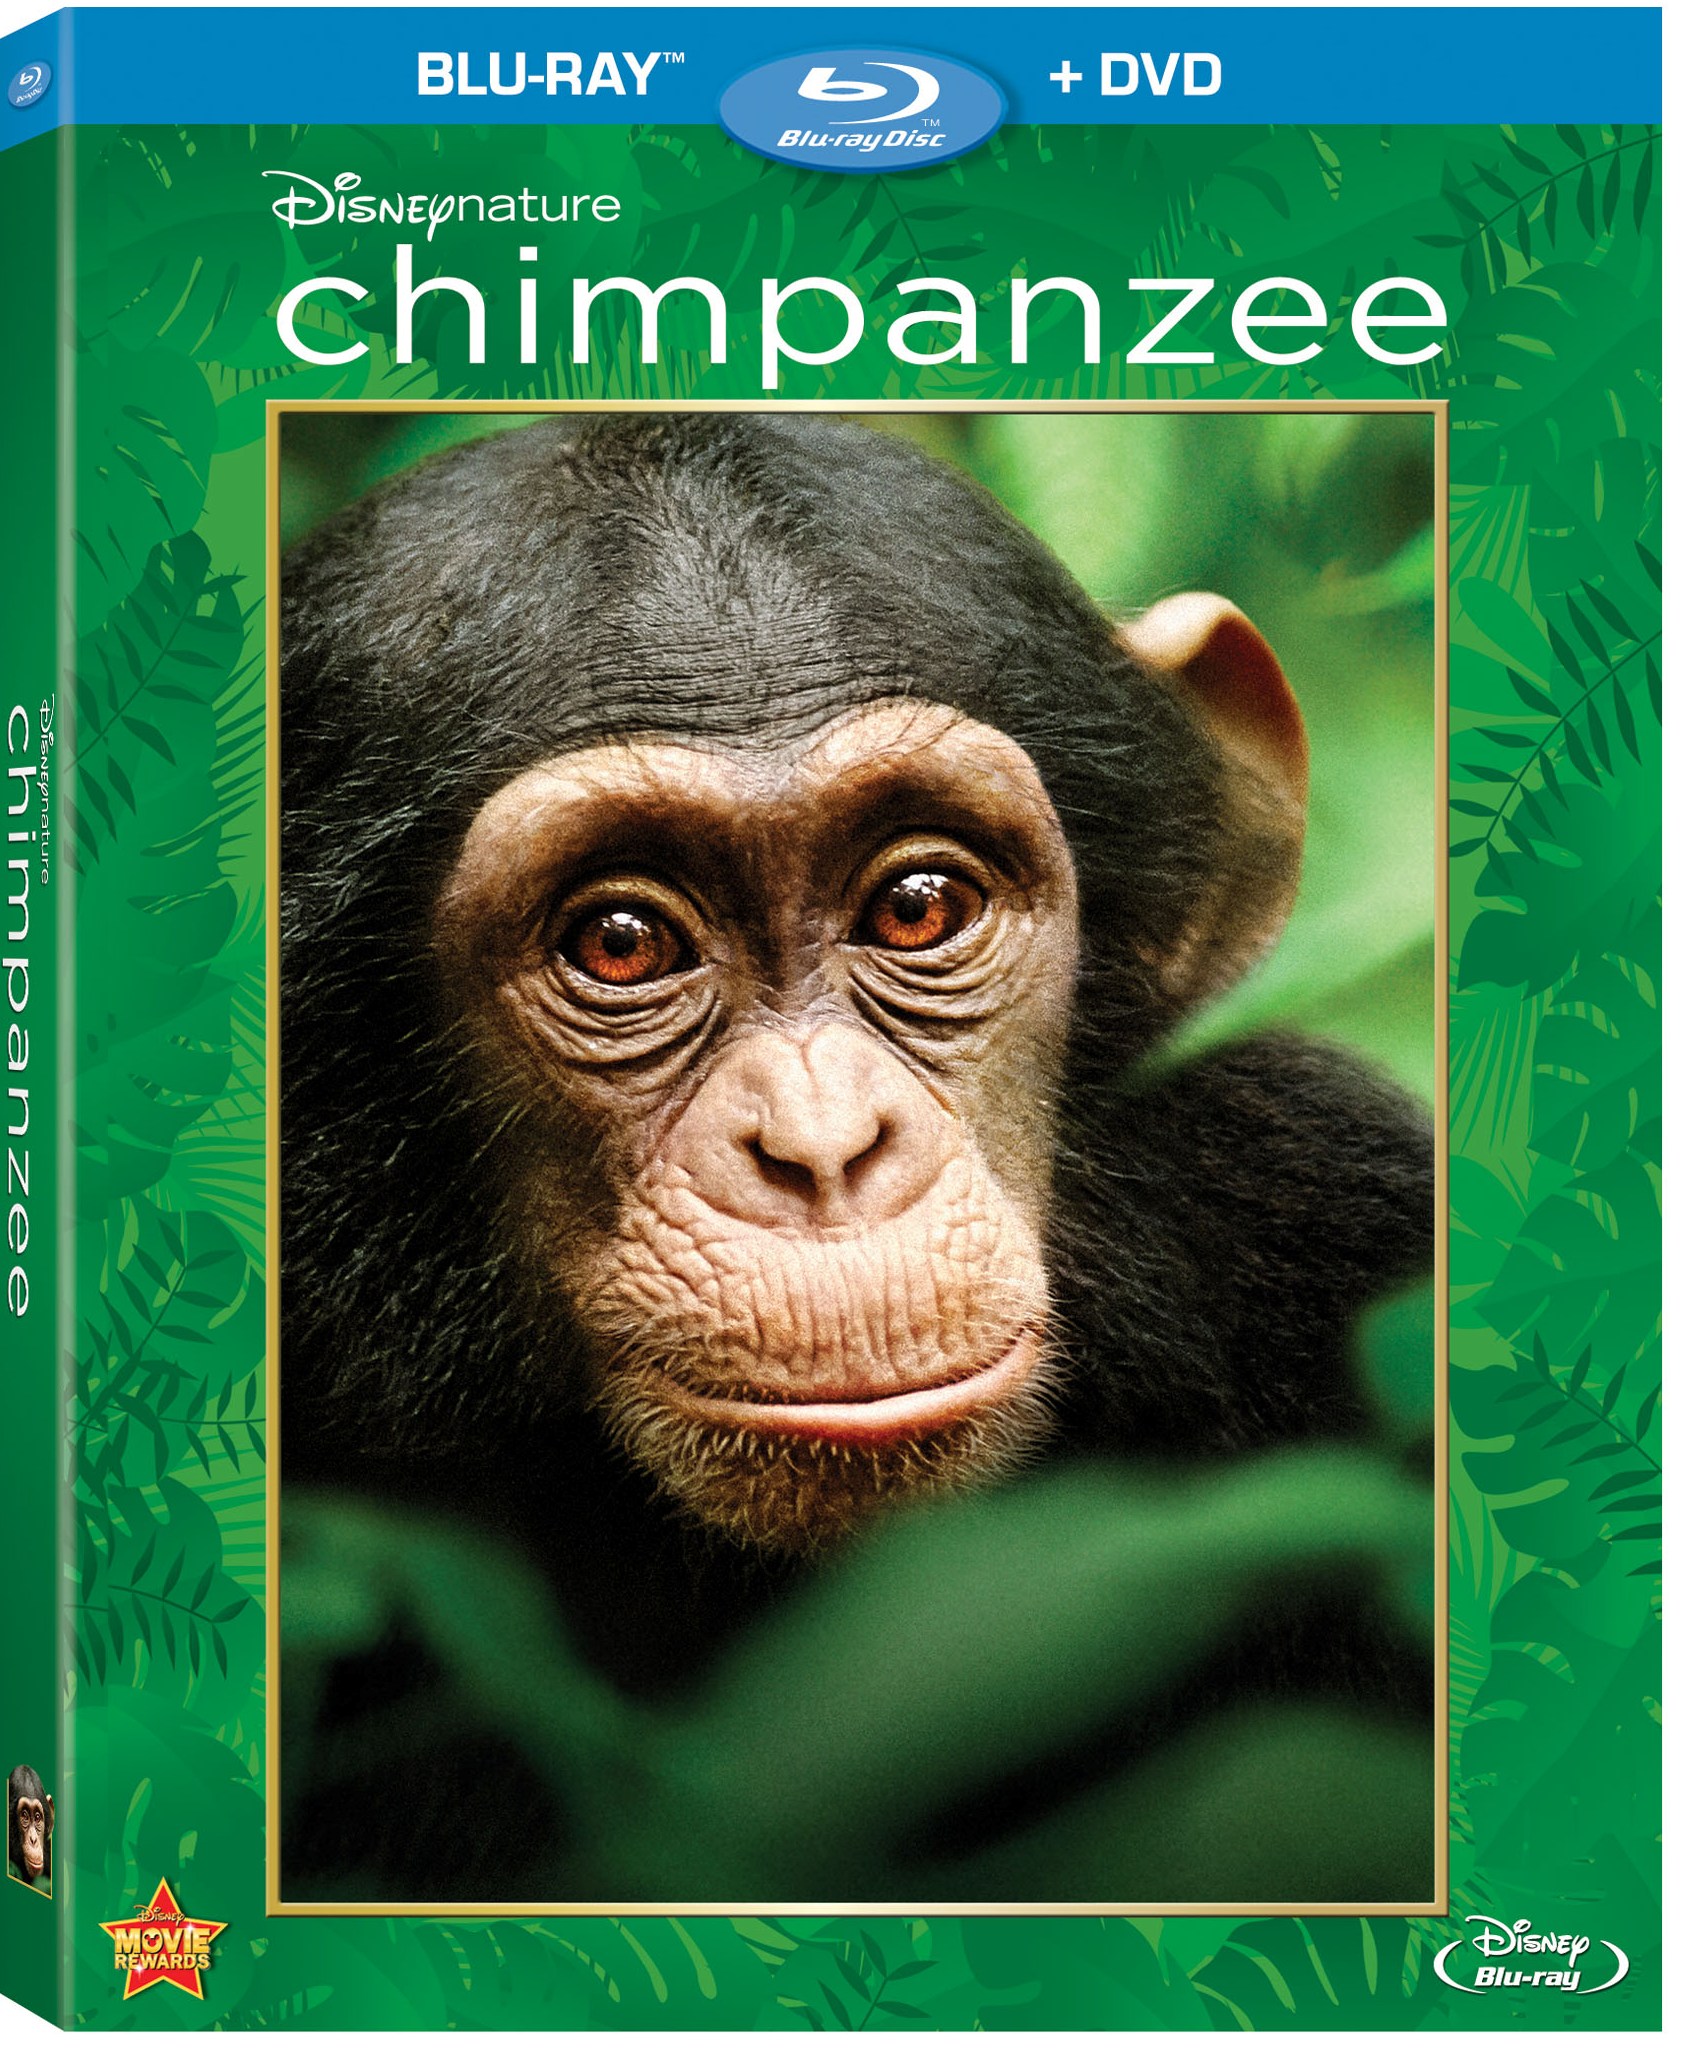 Bluray Review: Disney Nature’s Chimpanzee